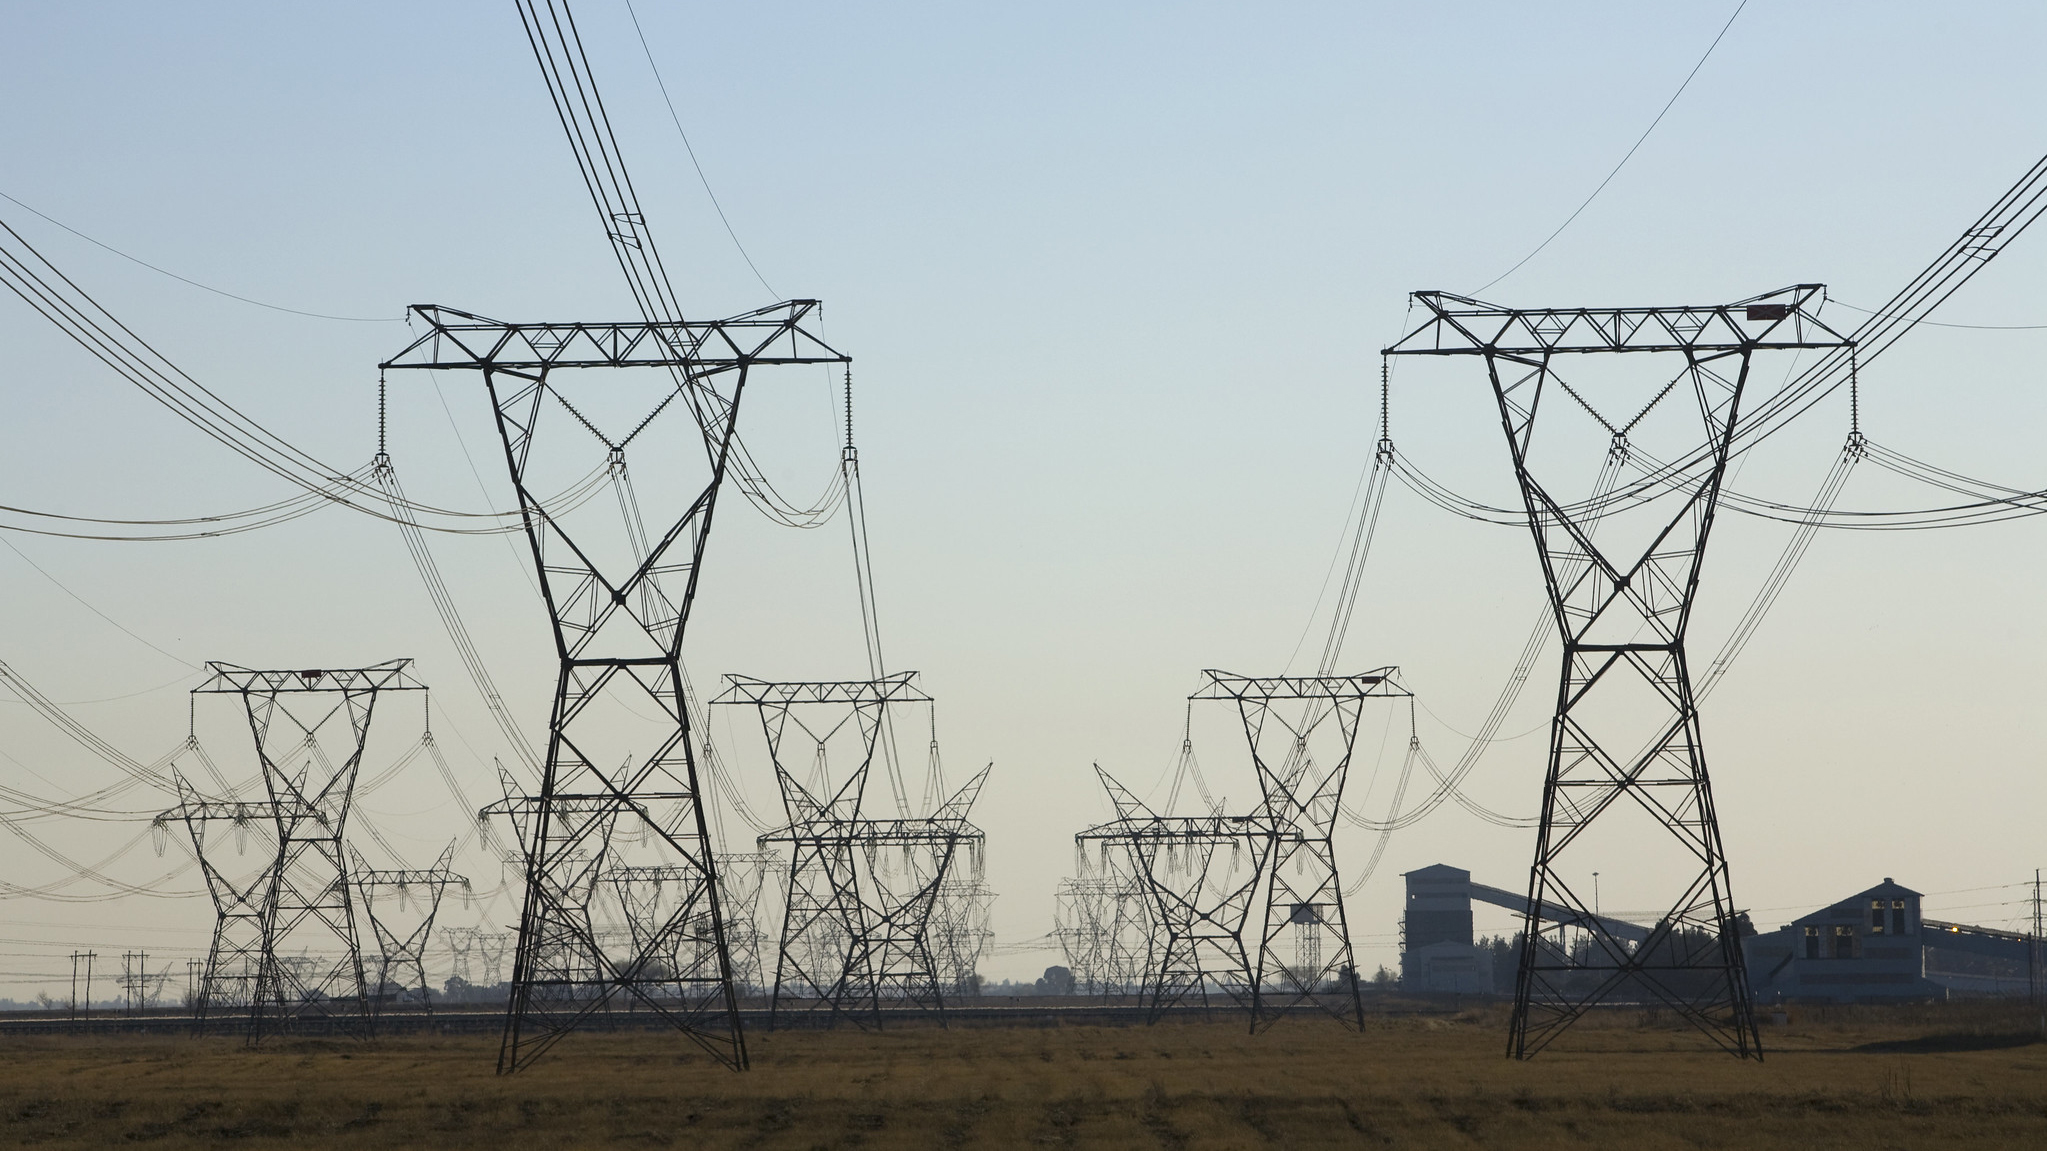 South Africa’s Energy Crisis Escalates INTERNATIONALIST 360°